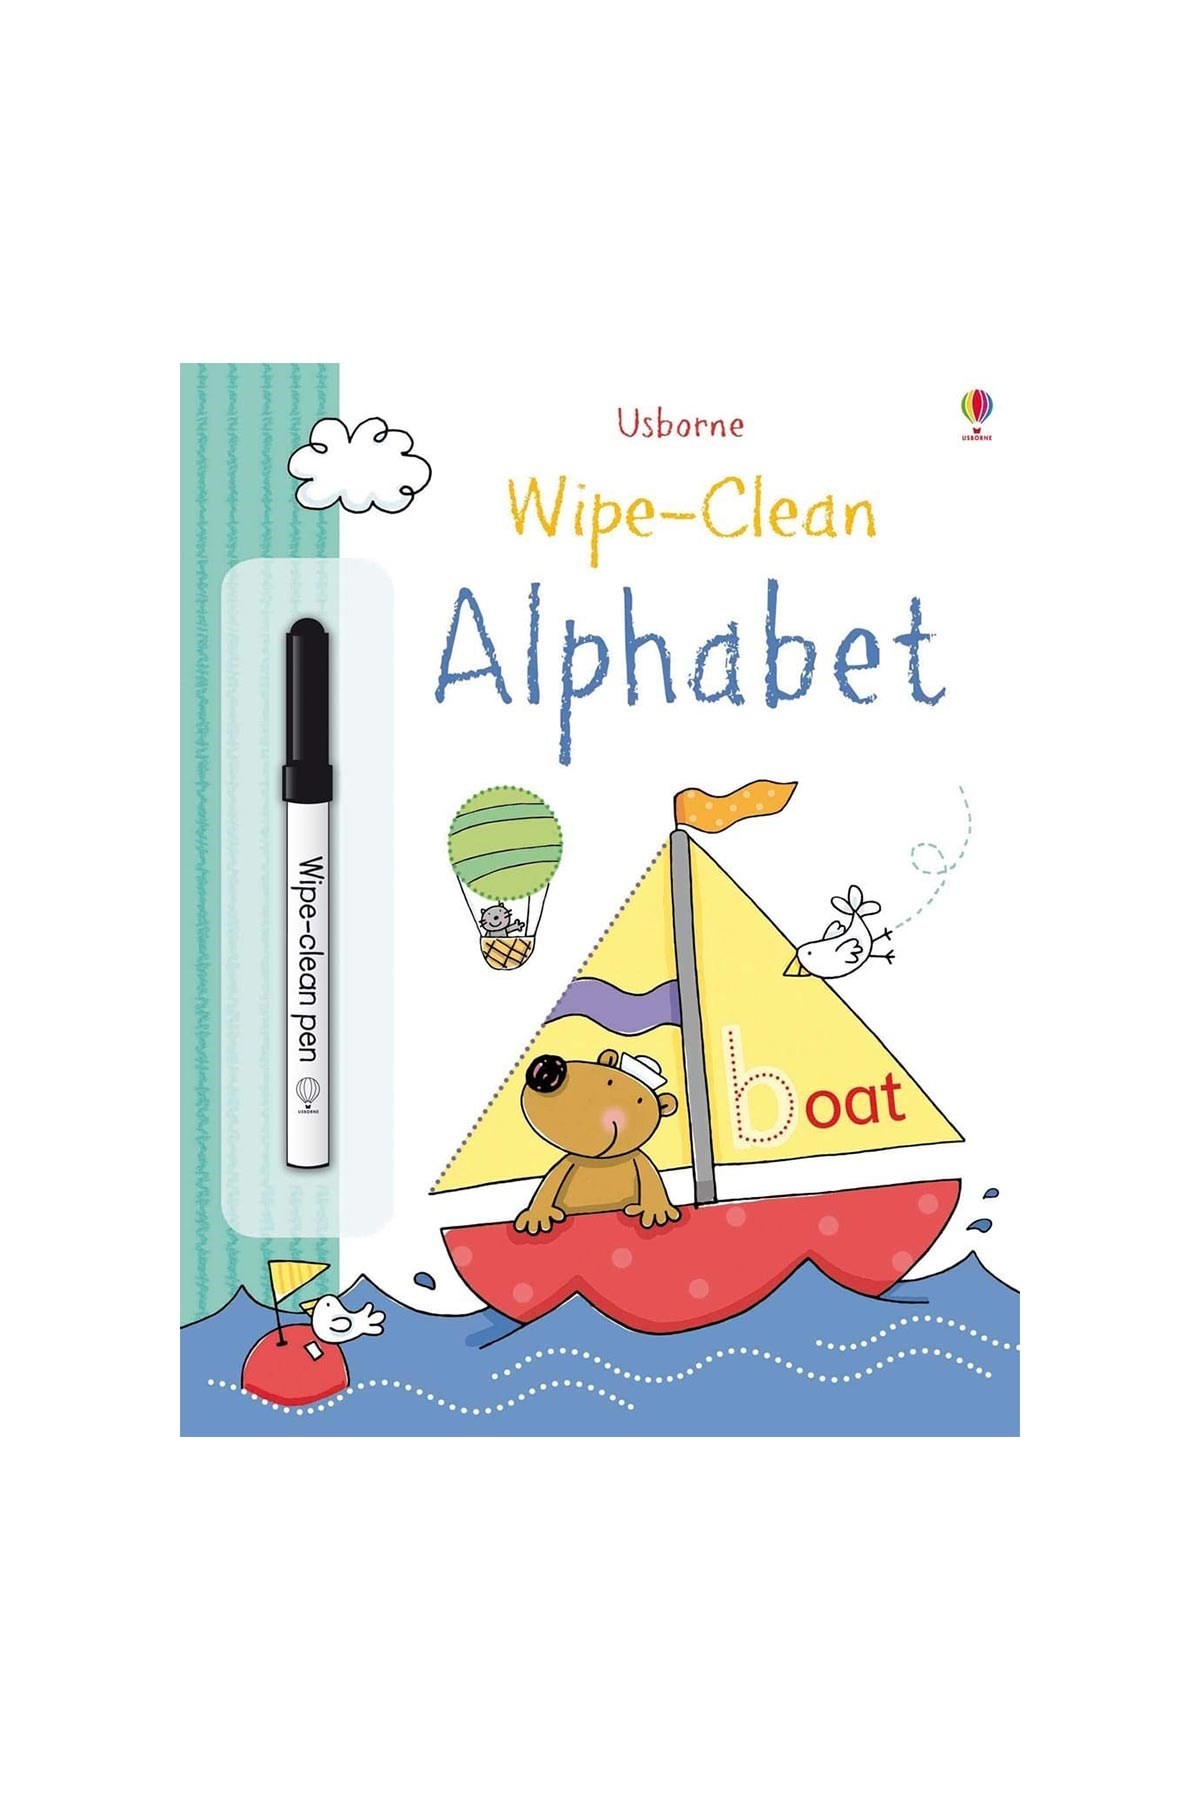 The Usborne Wipe Clean Alphabet